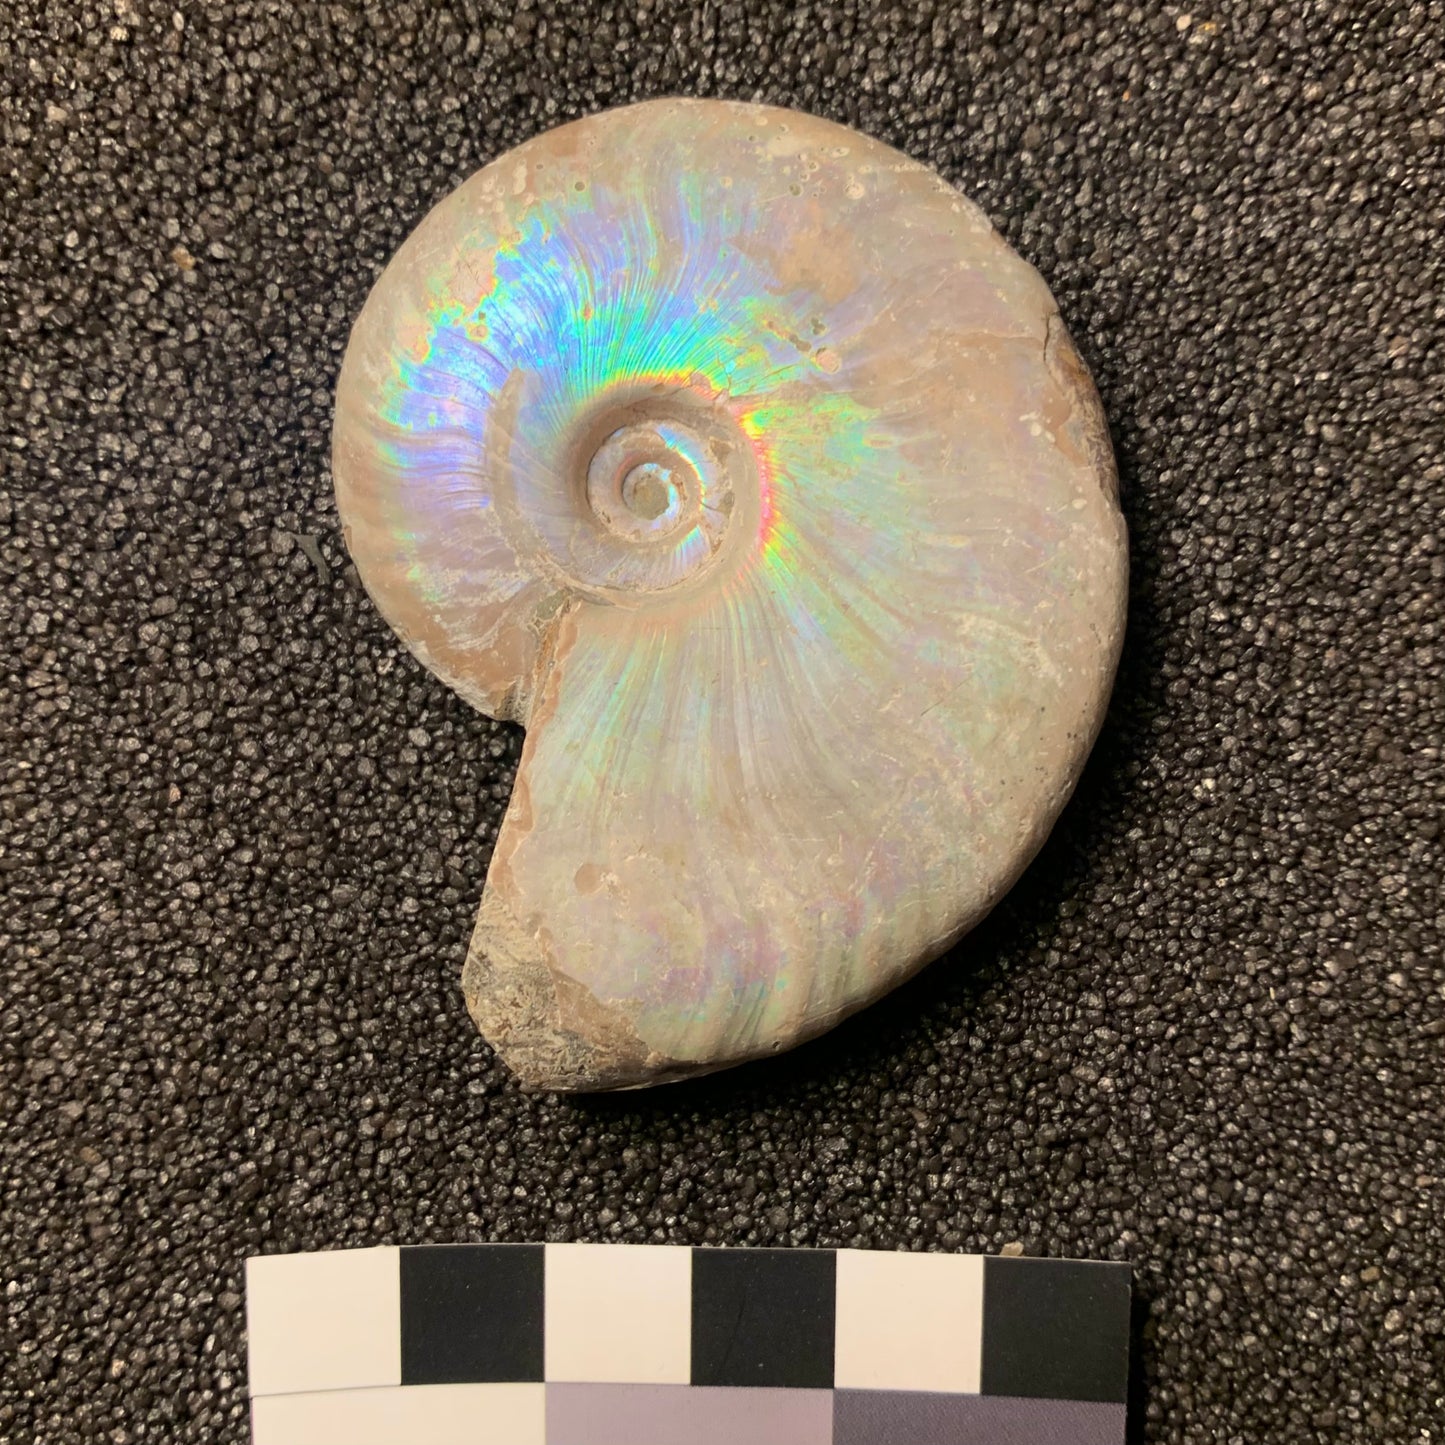 F216 | Ammonite | Cleoniceras sp.